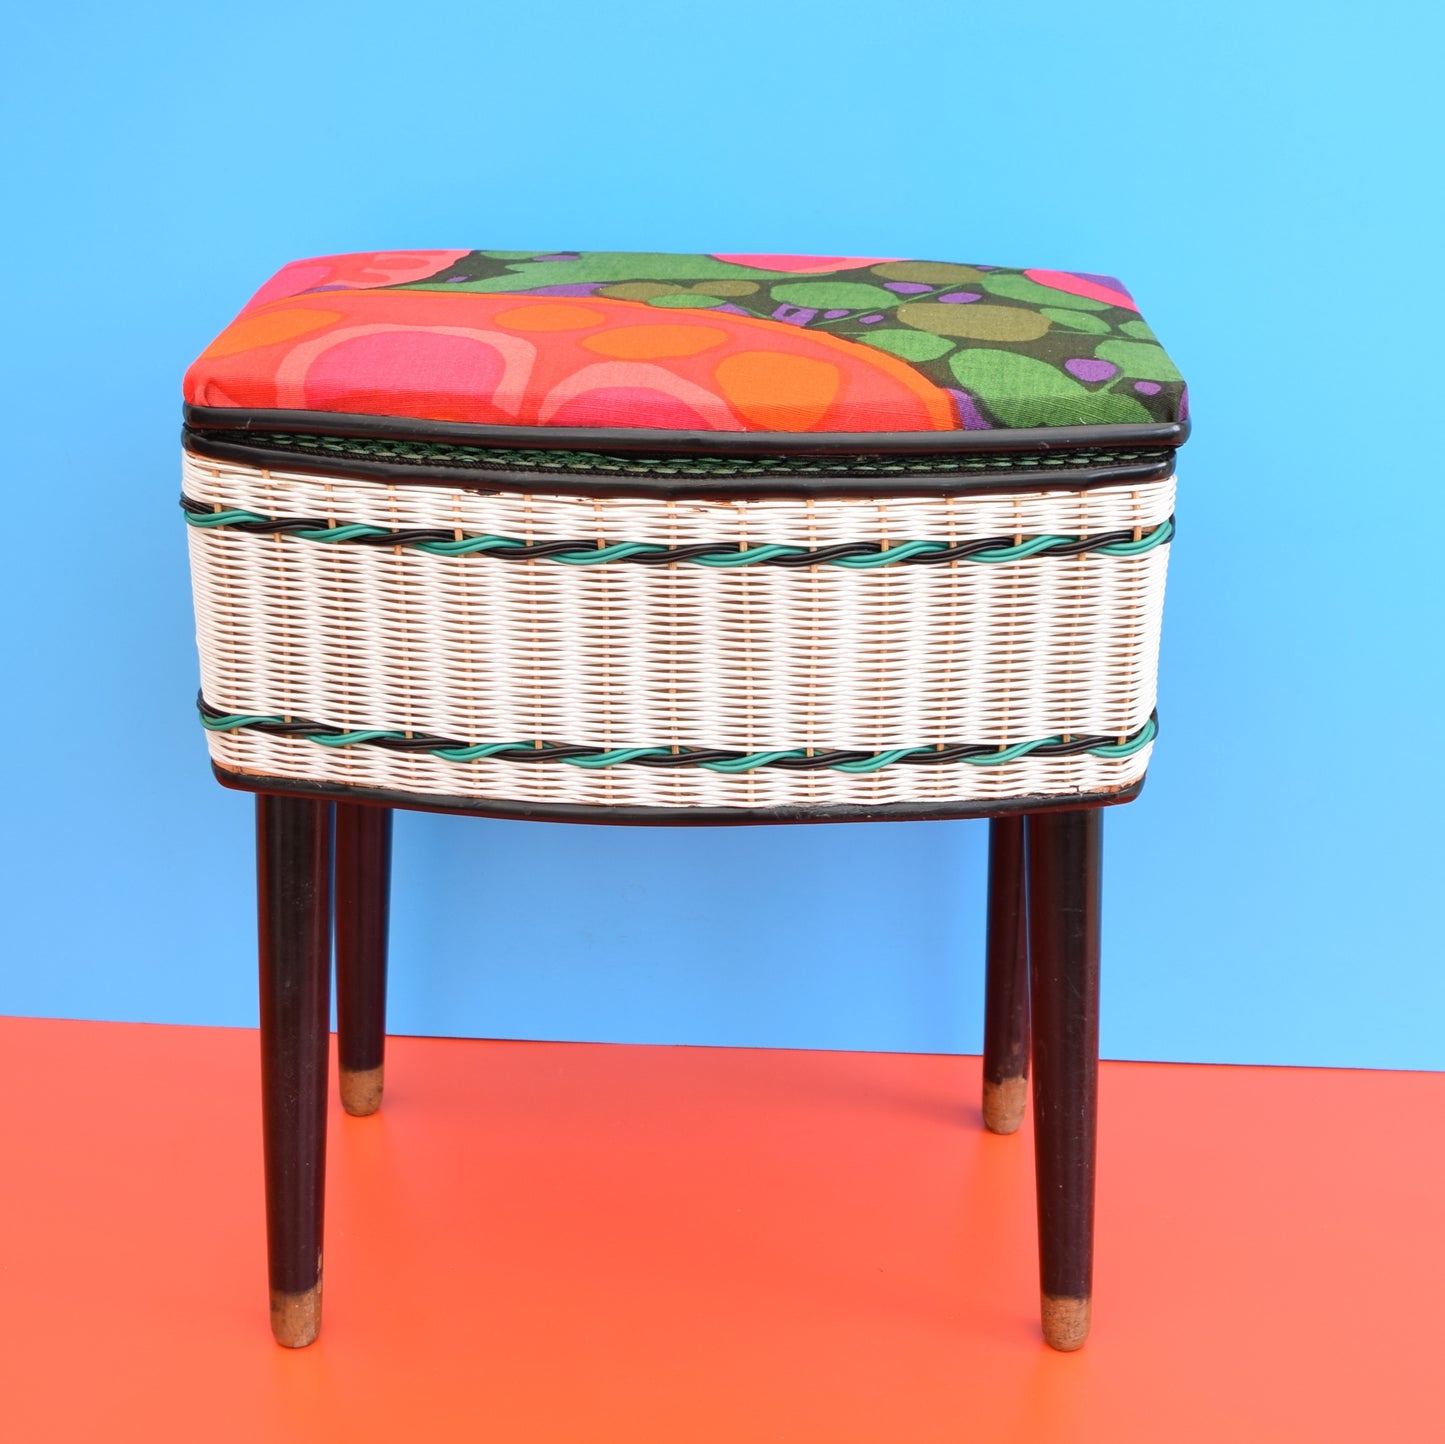 Vintage 1960s Sewing / Hobby Box - Swedish Boras Fabric, Green, Pink & Orange